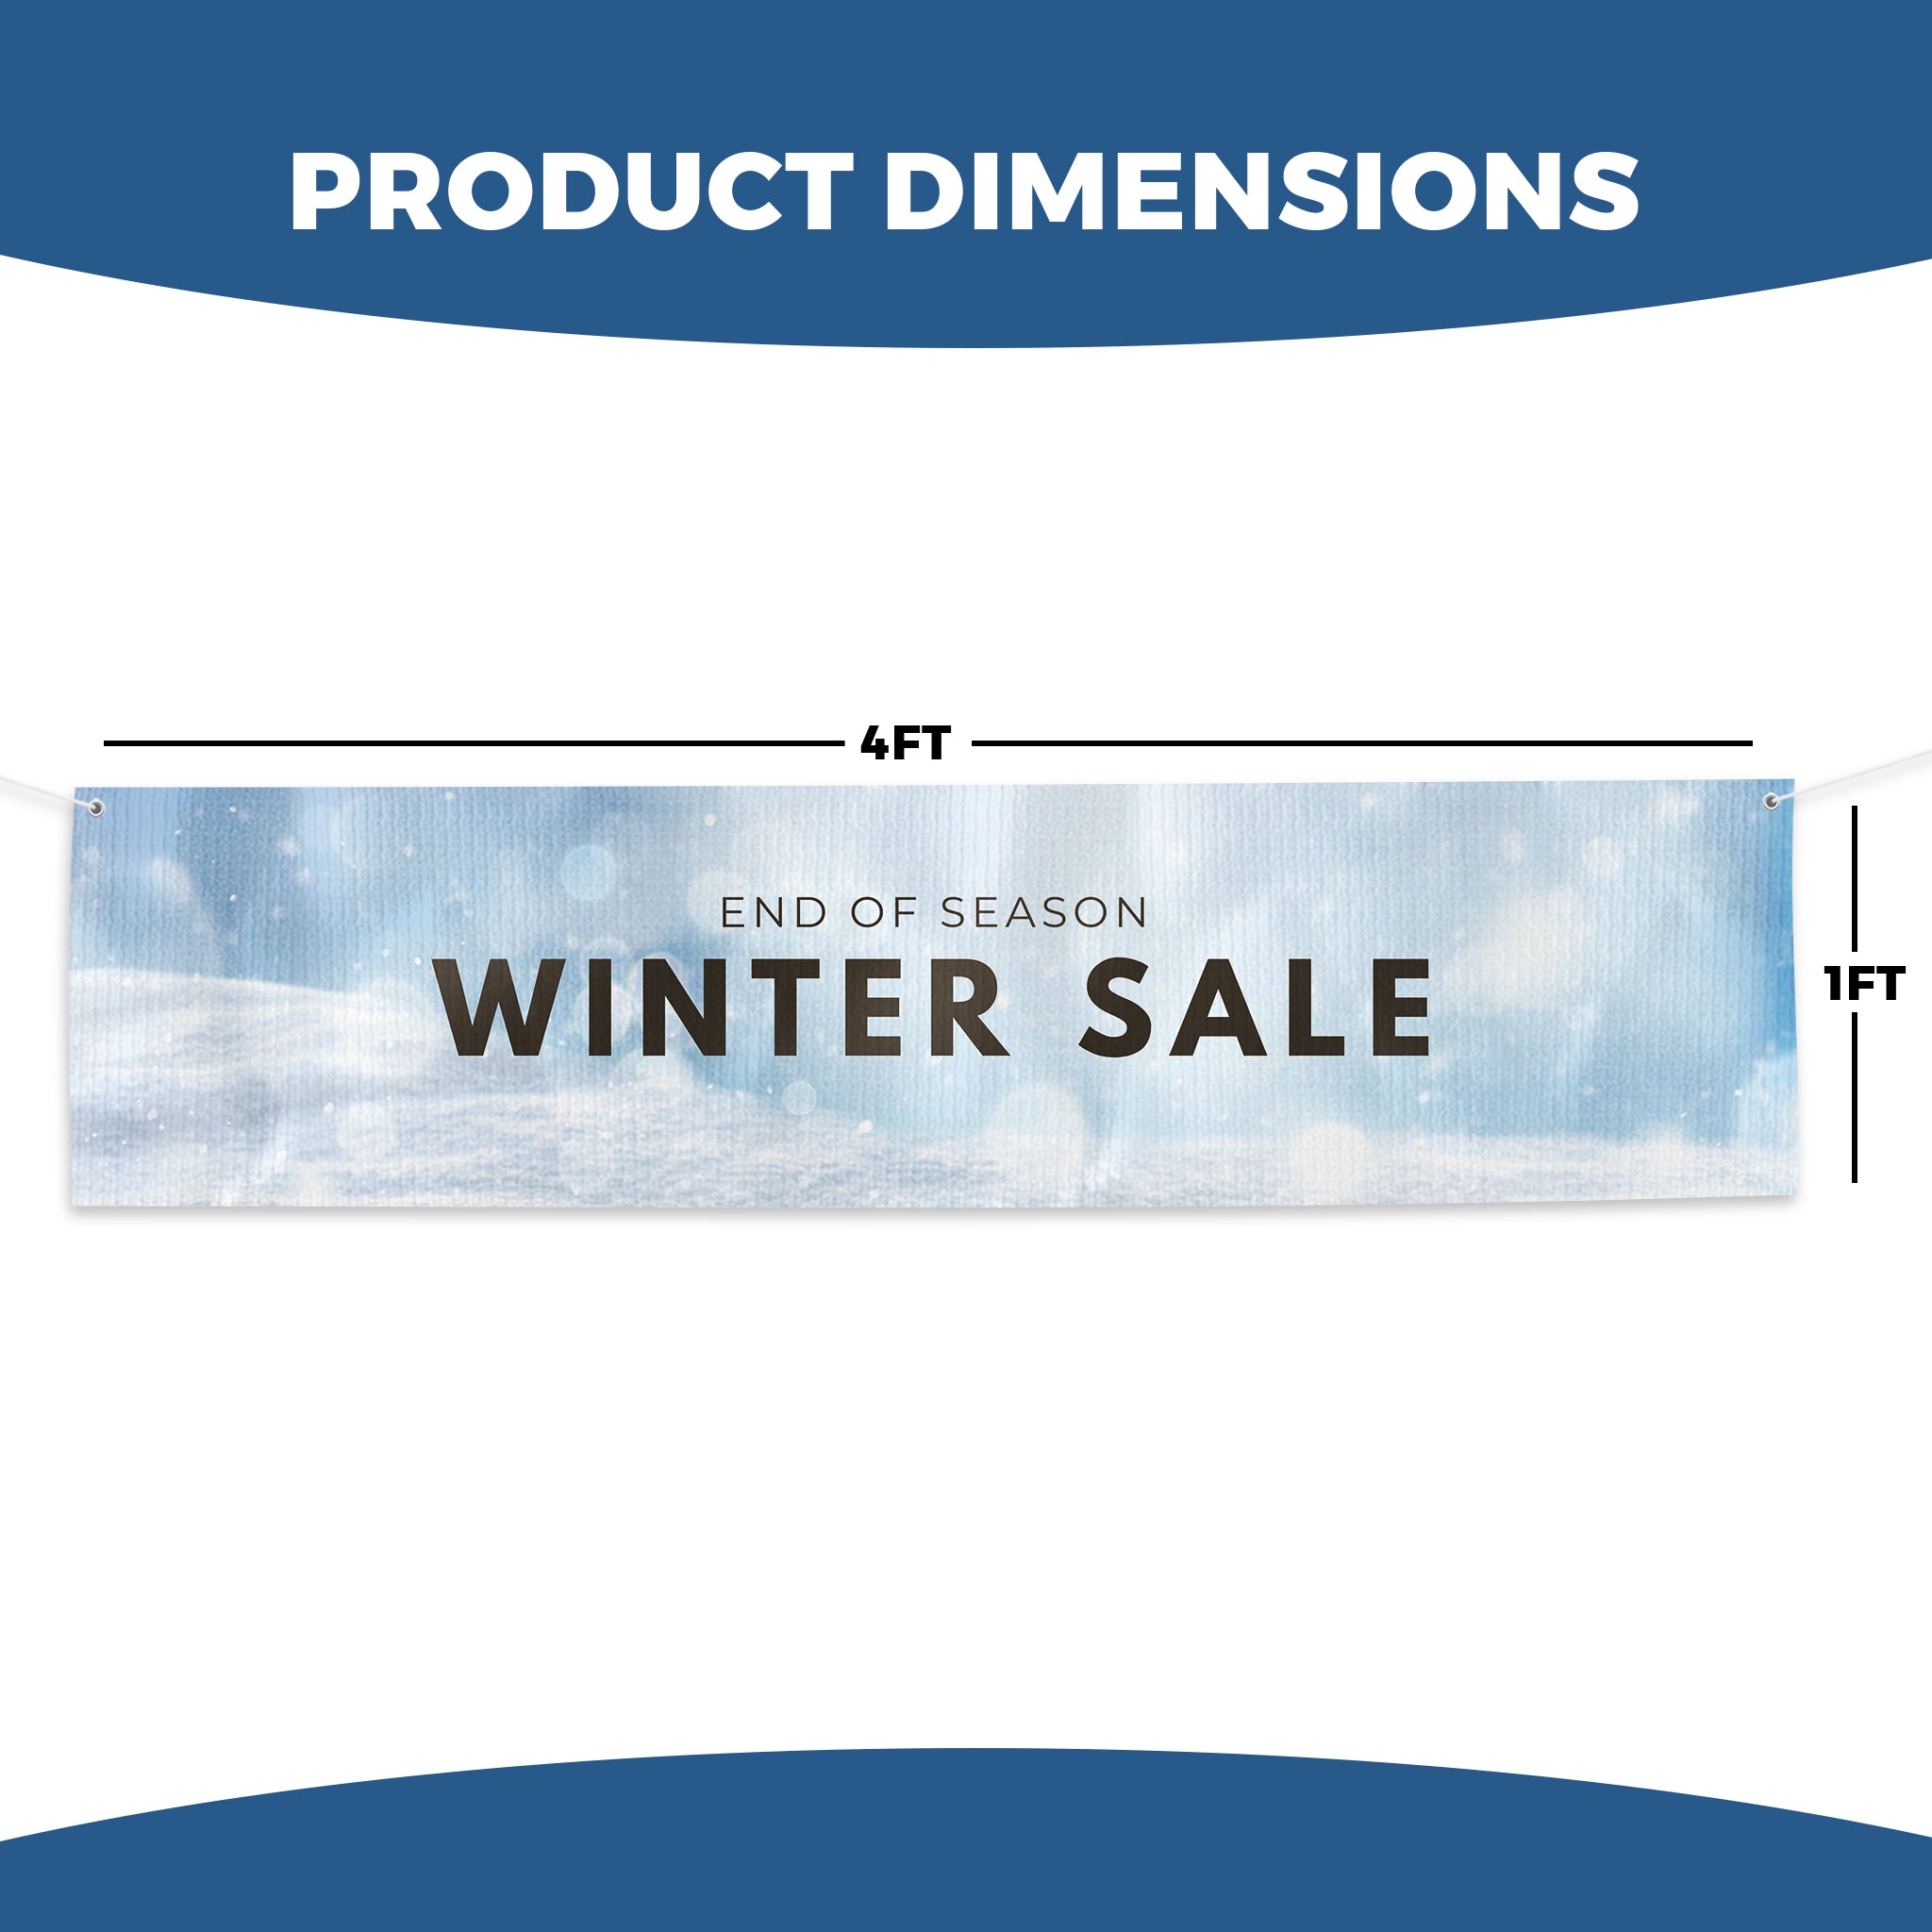 Winter Sale Large Banner